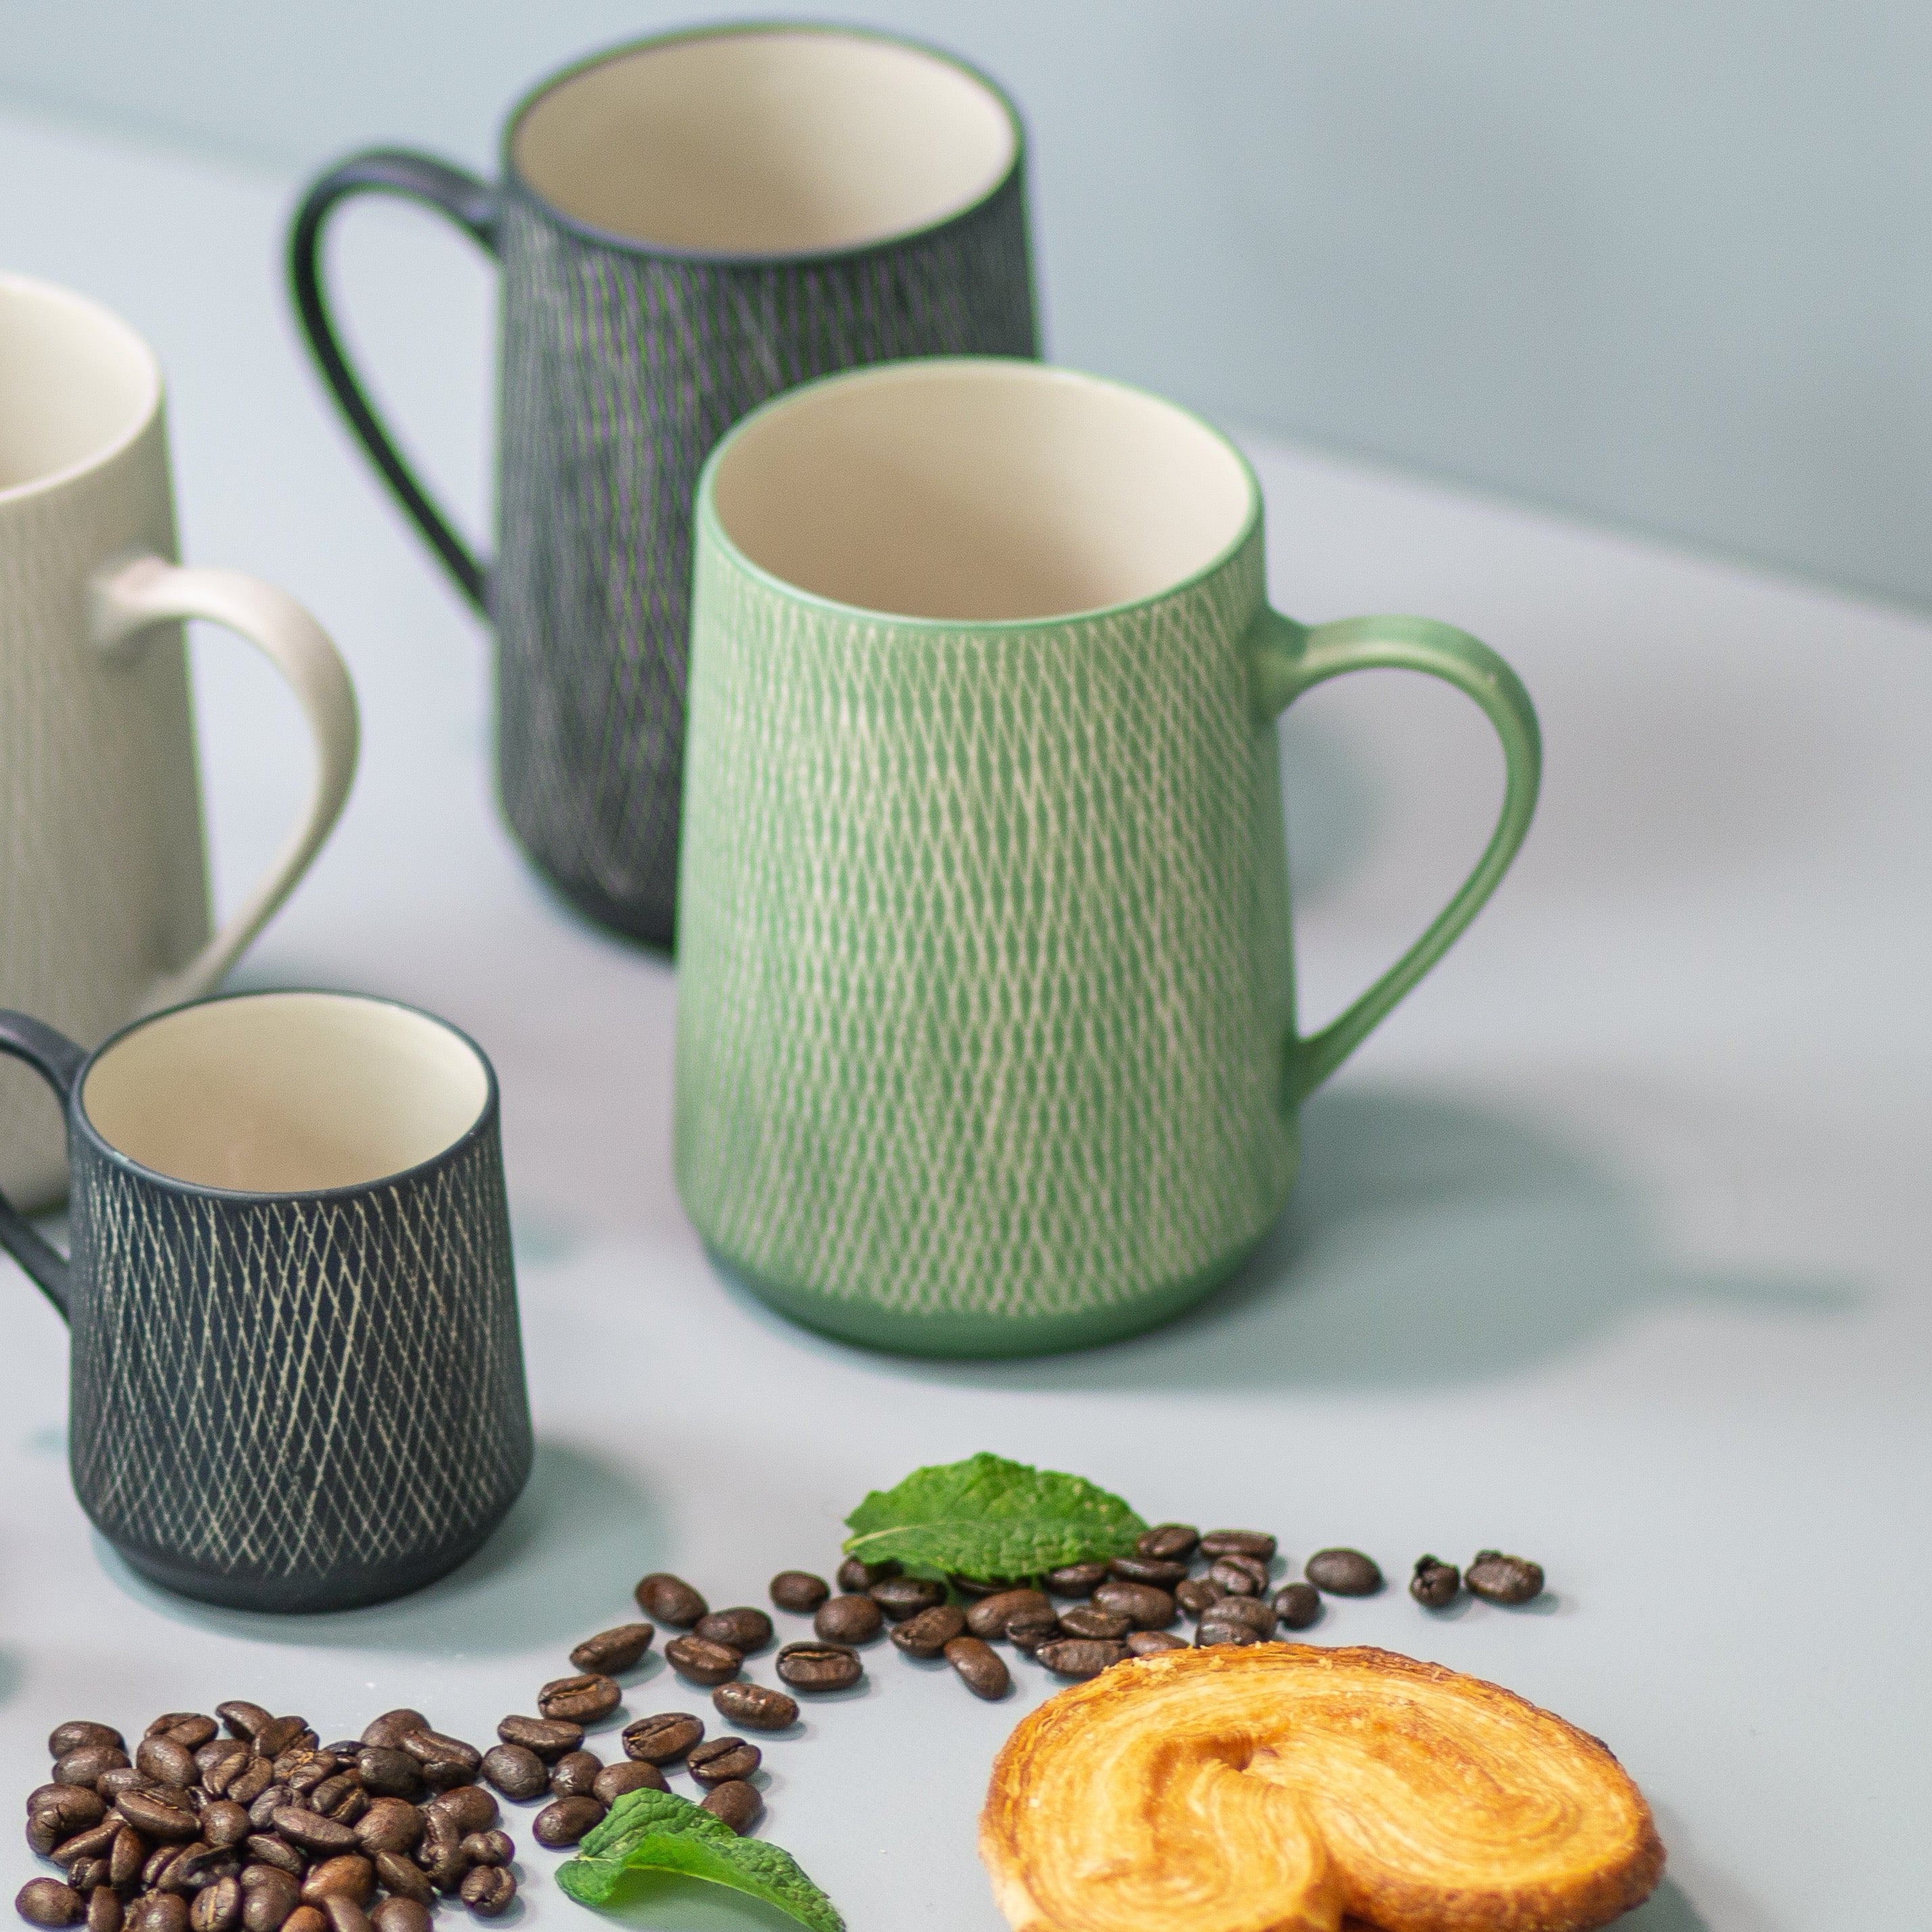 Jade Crosshatch Espresso Cups, Set of 4